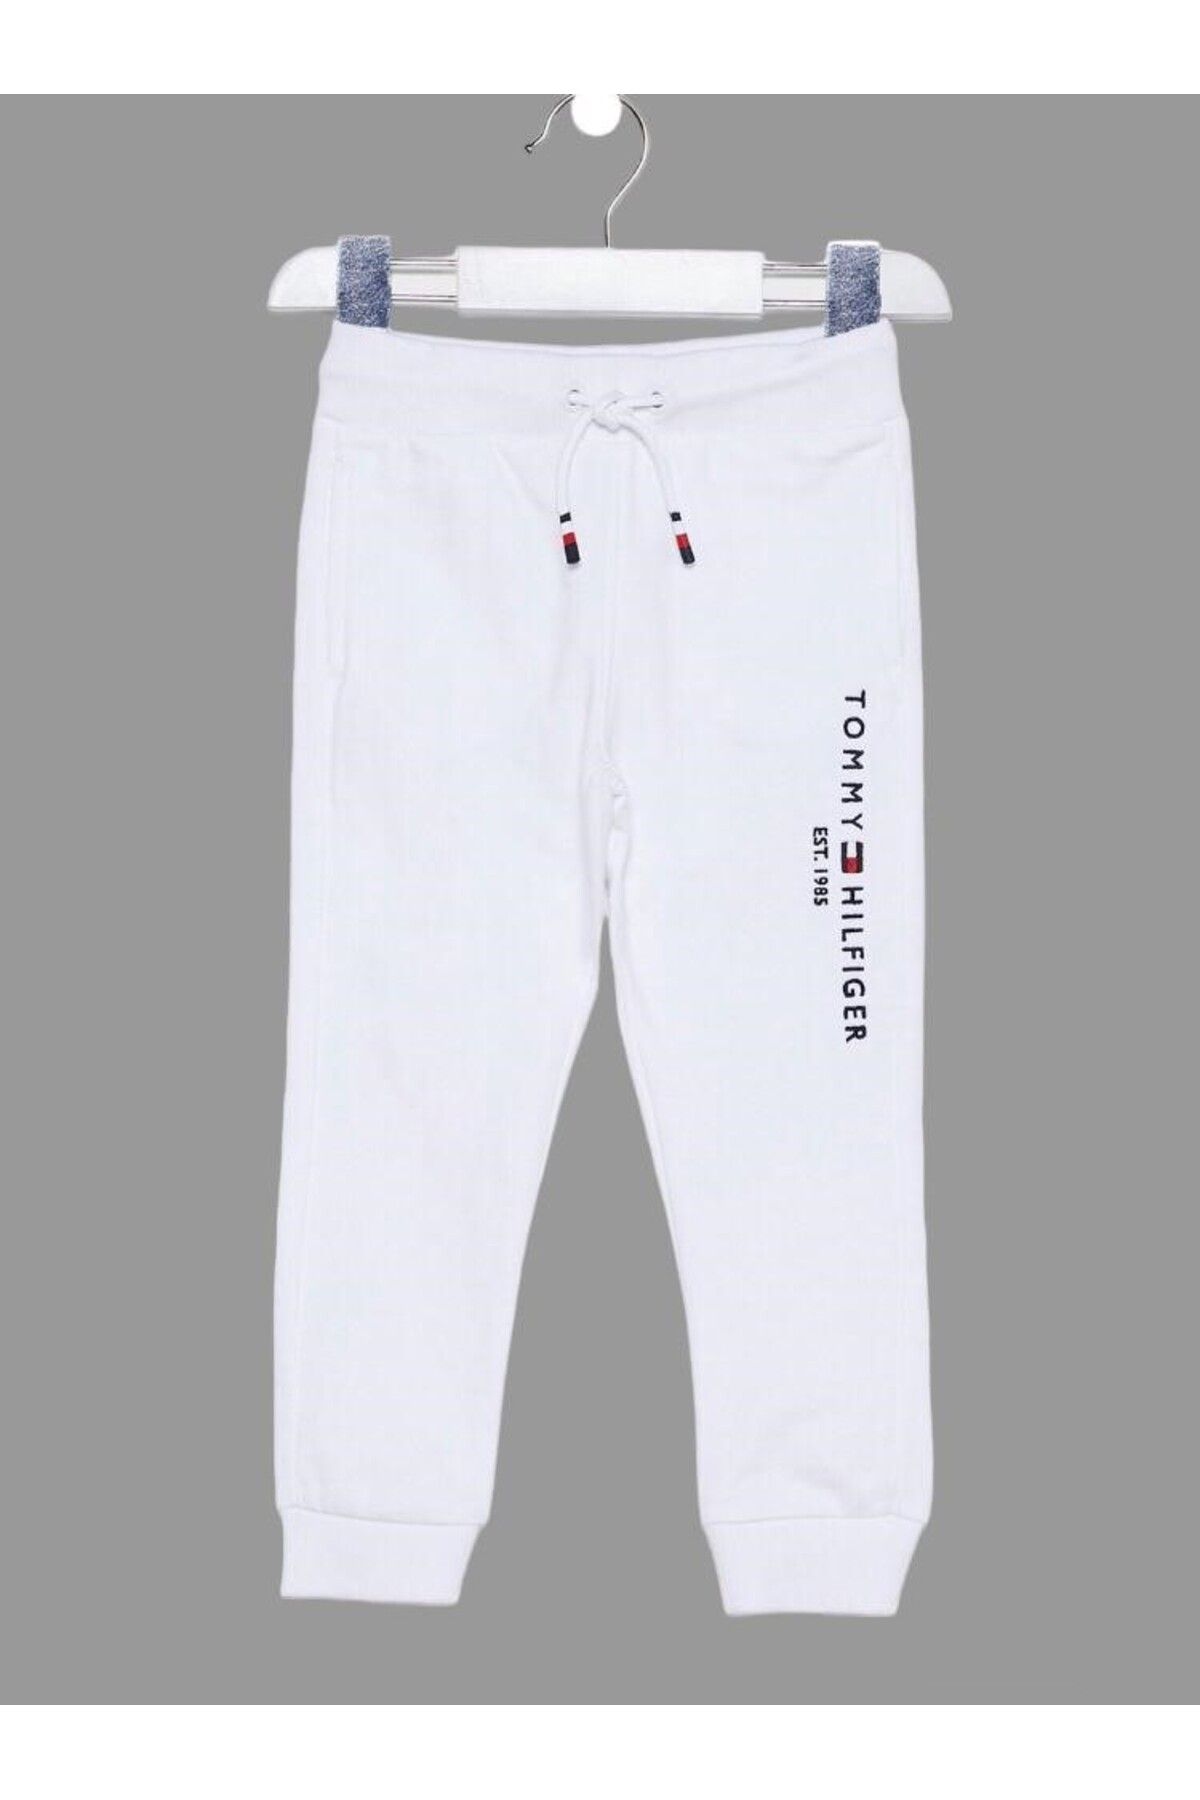 Tommy Hilfiger unısex Essential jogging pants KS0KS00207 Regular Fit